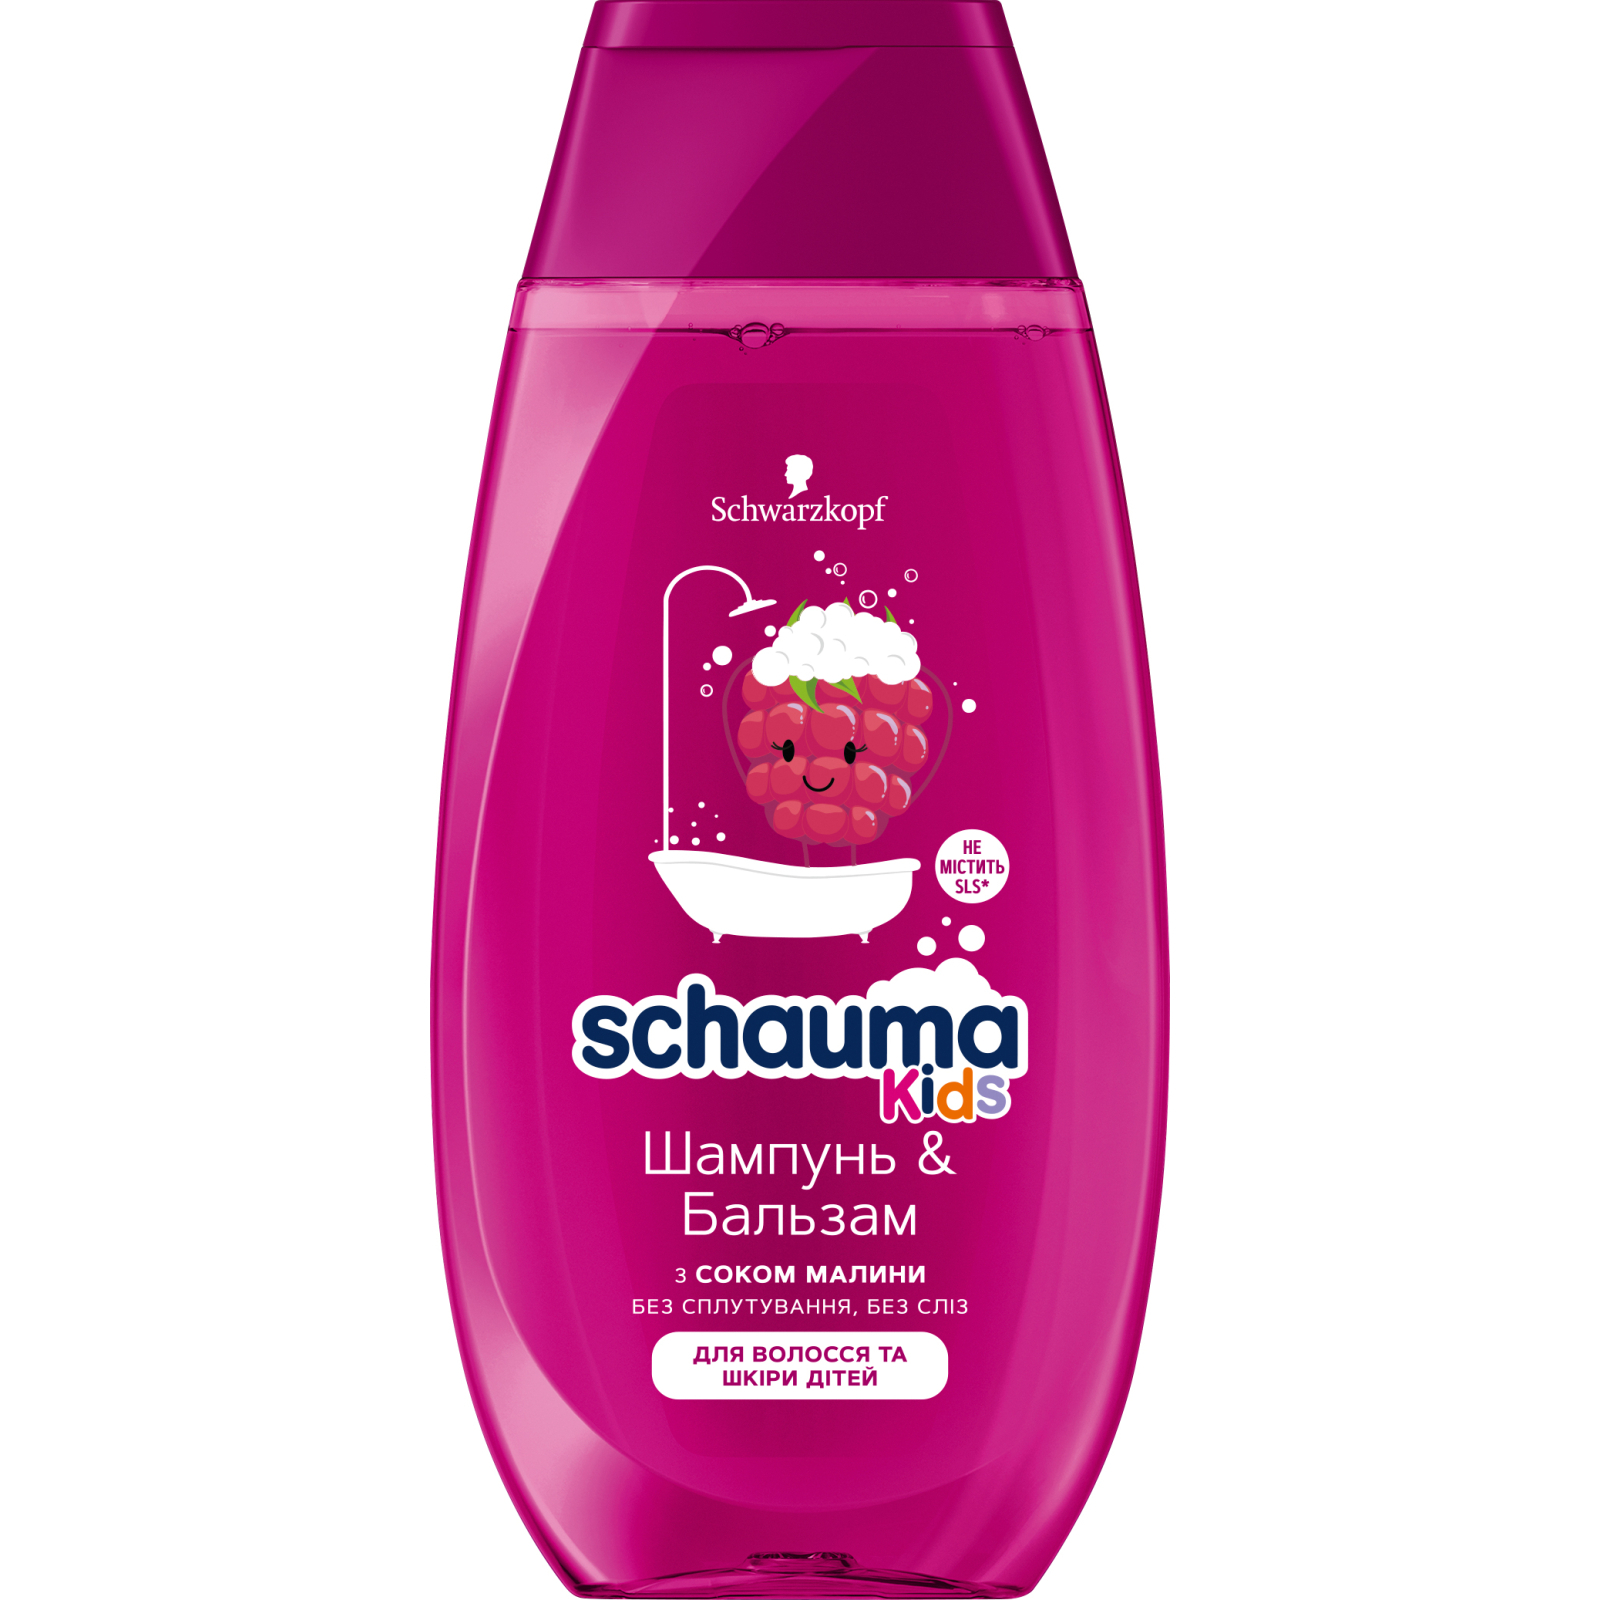 Set For girl Schauma kids Fa kids shampoo and shower gel 4